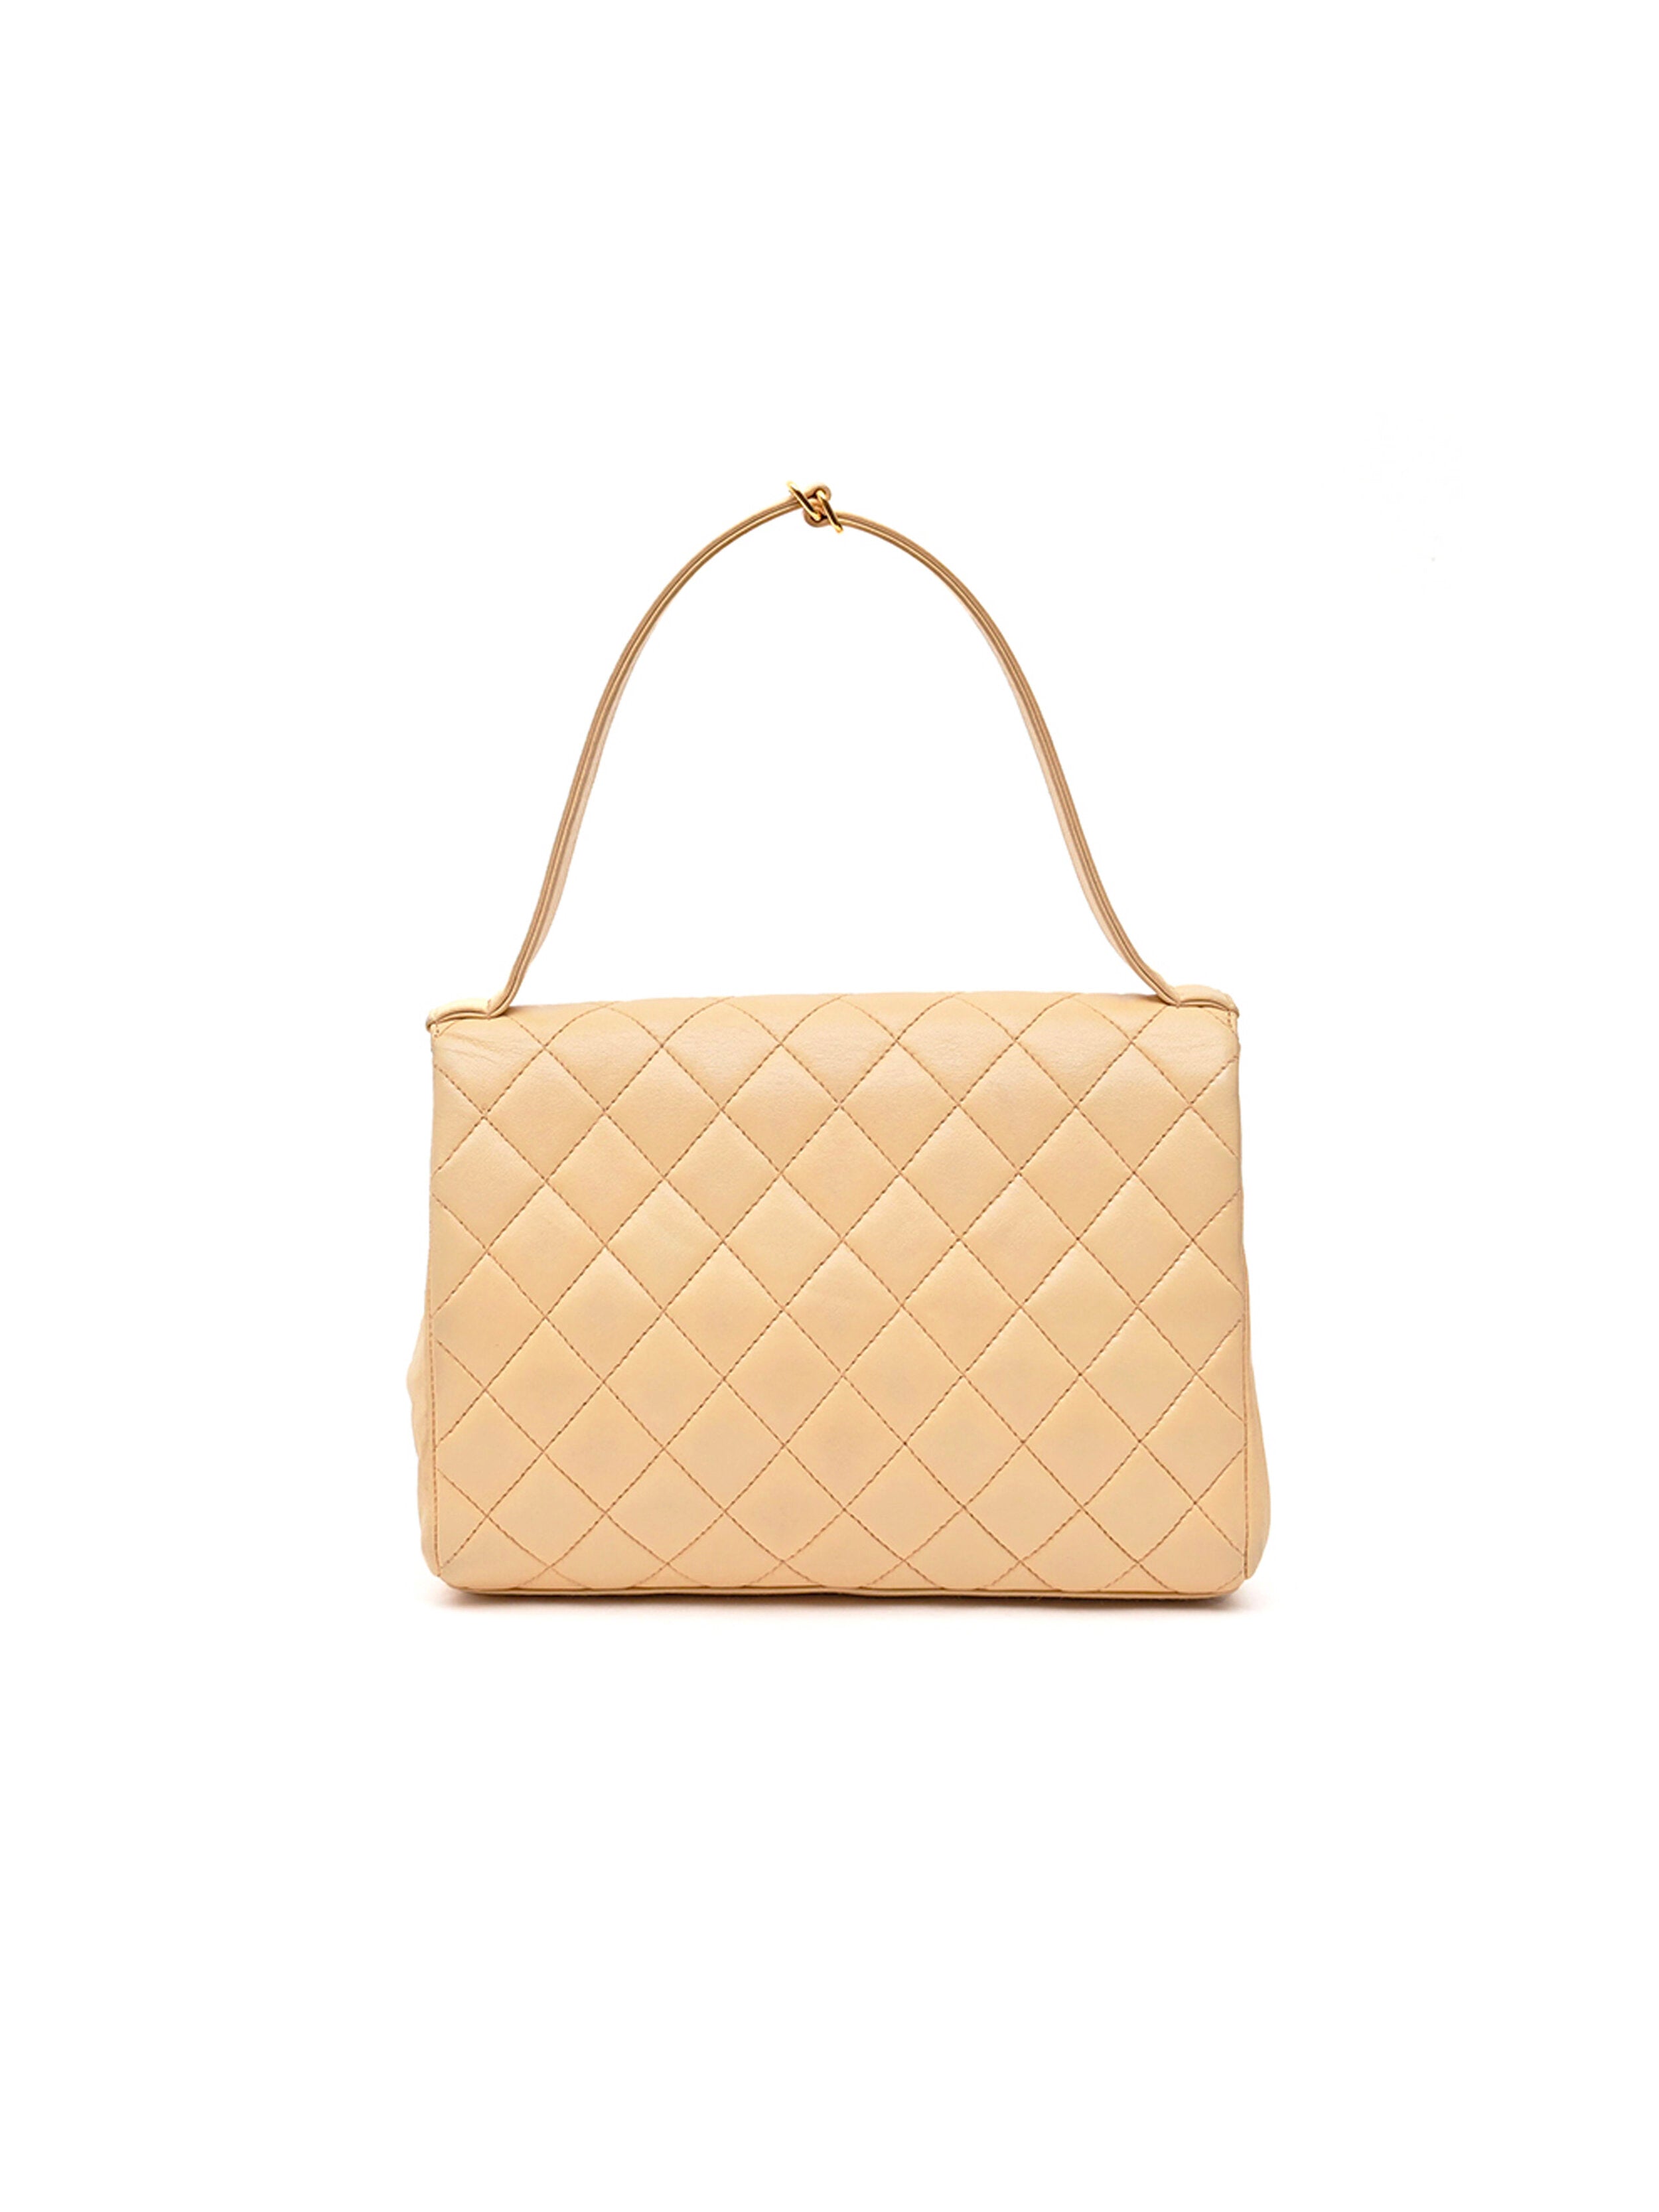 Chanel 2000s Beige Small Leather Matresse 5s Handbag · INTO